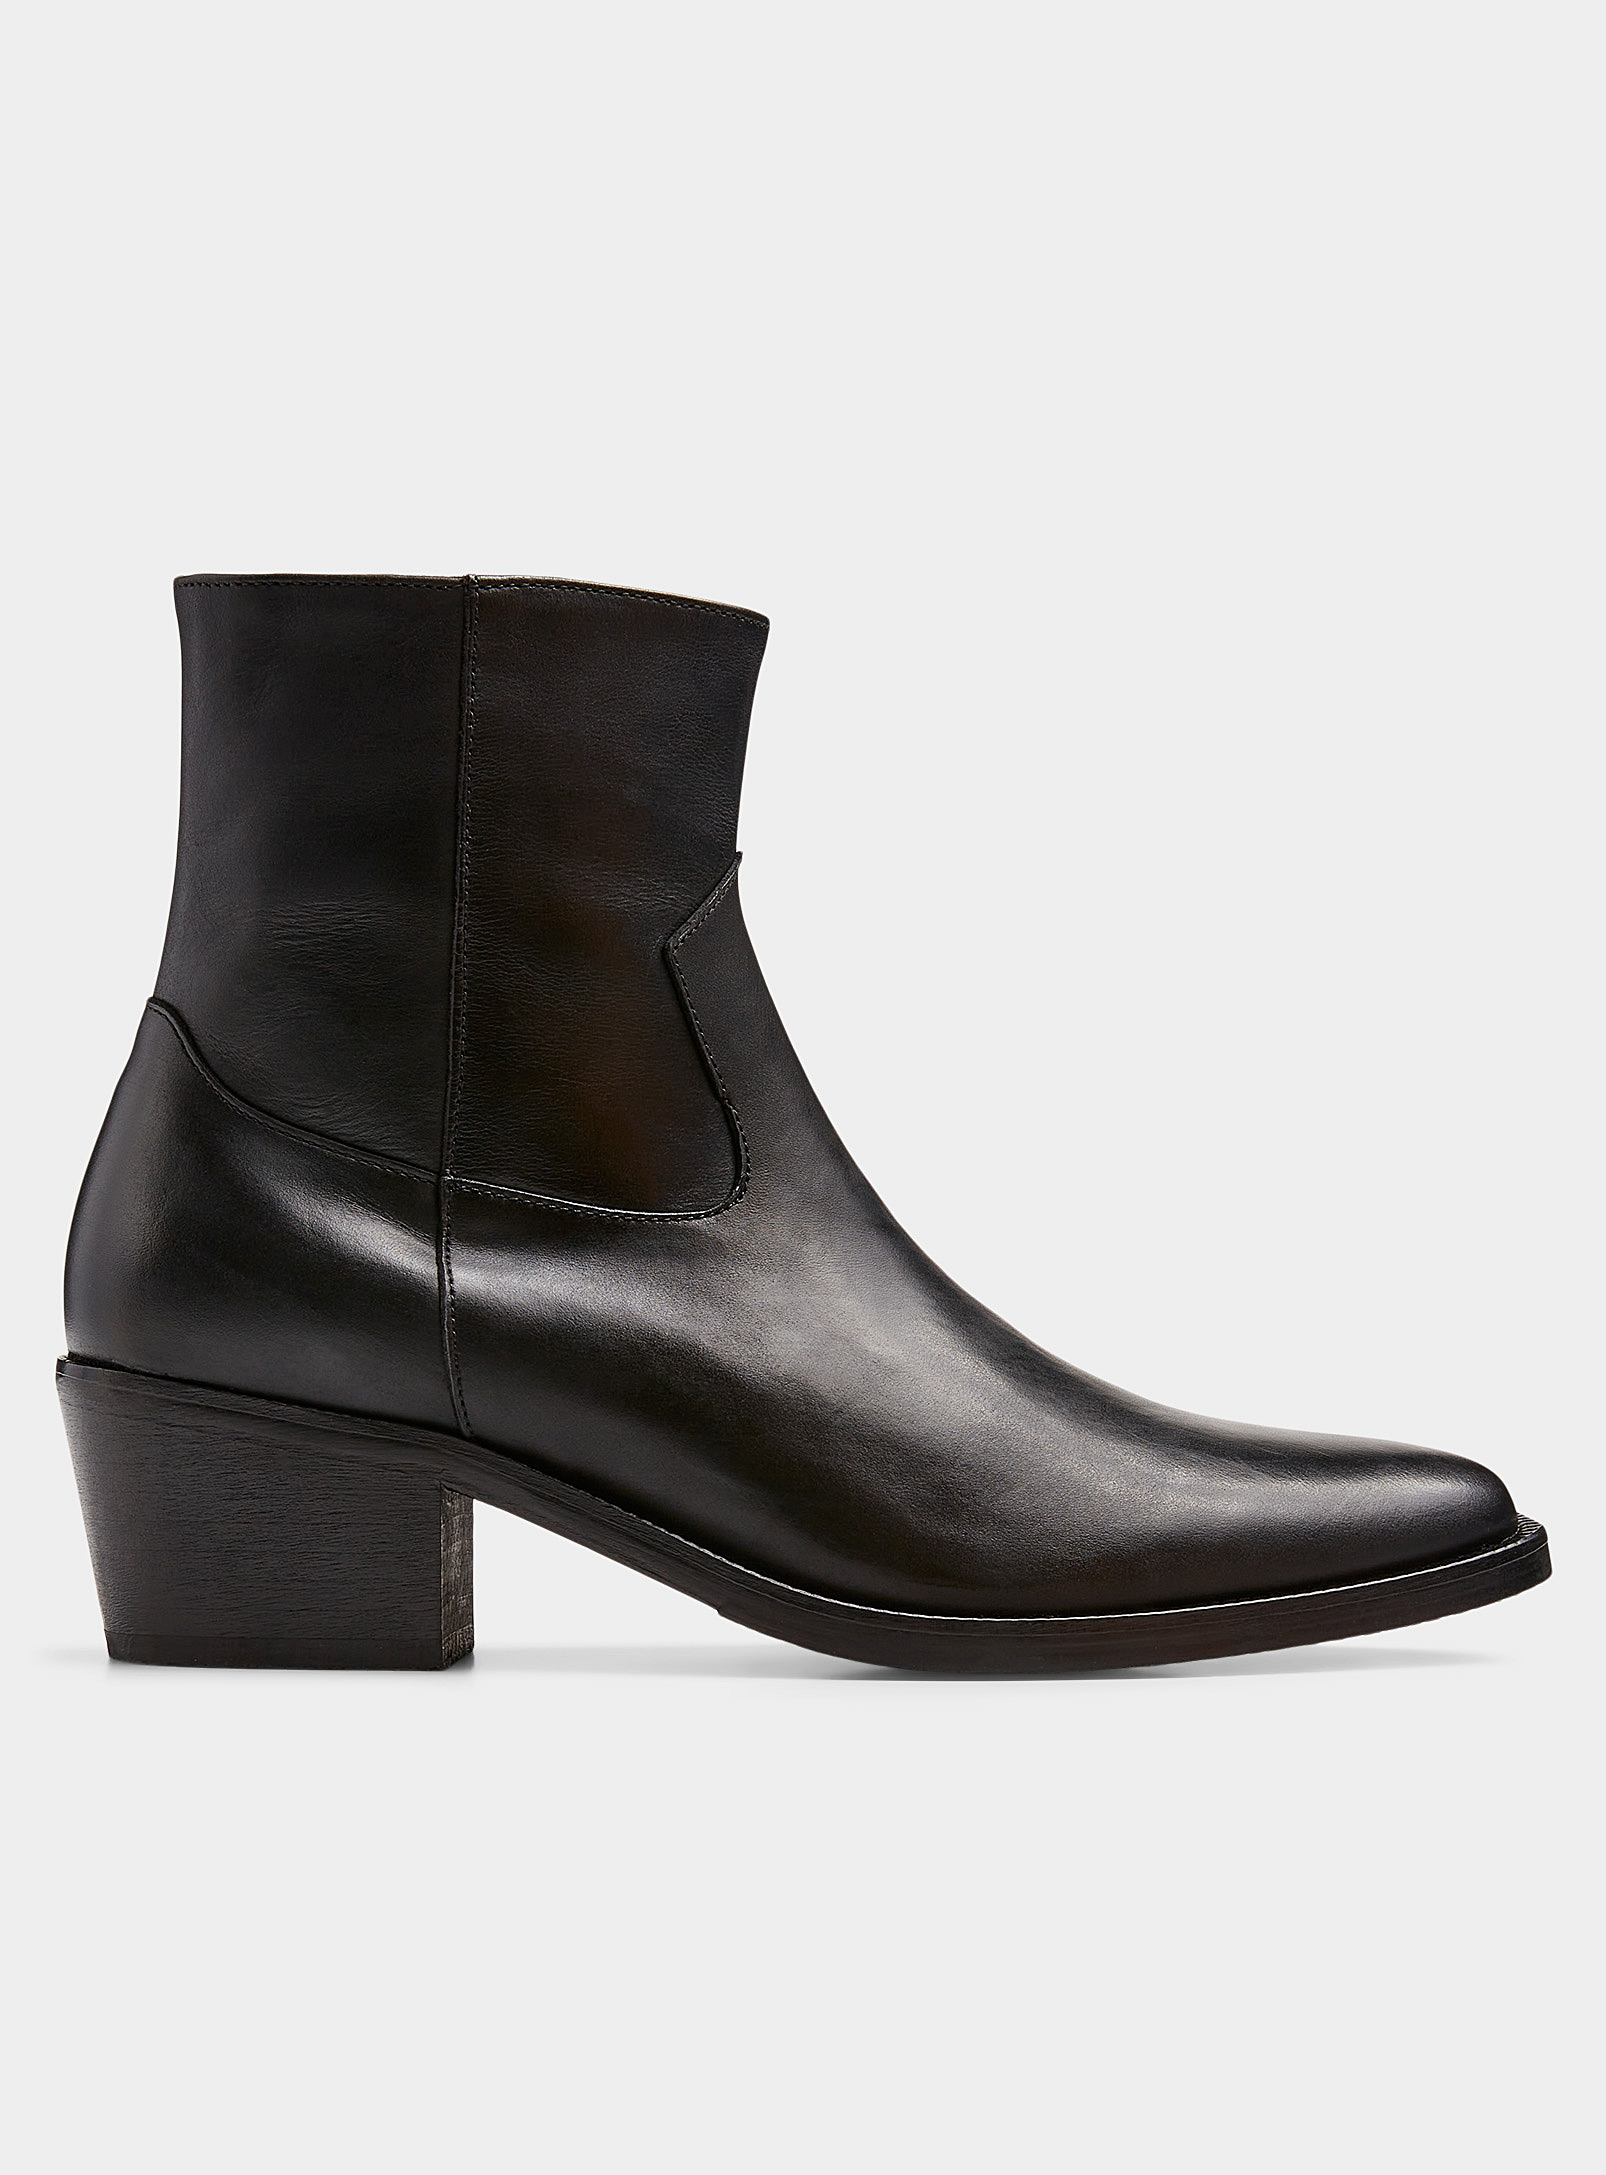 Simons - Men's Short leather Western boots Men